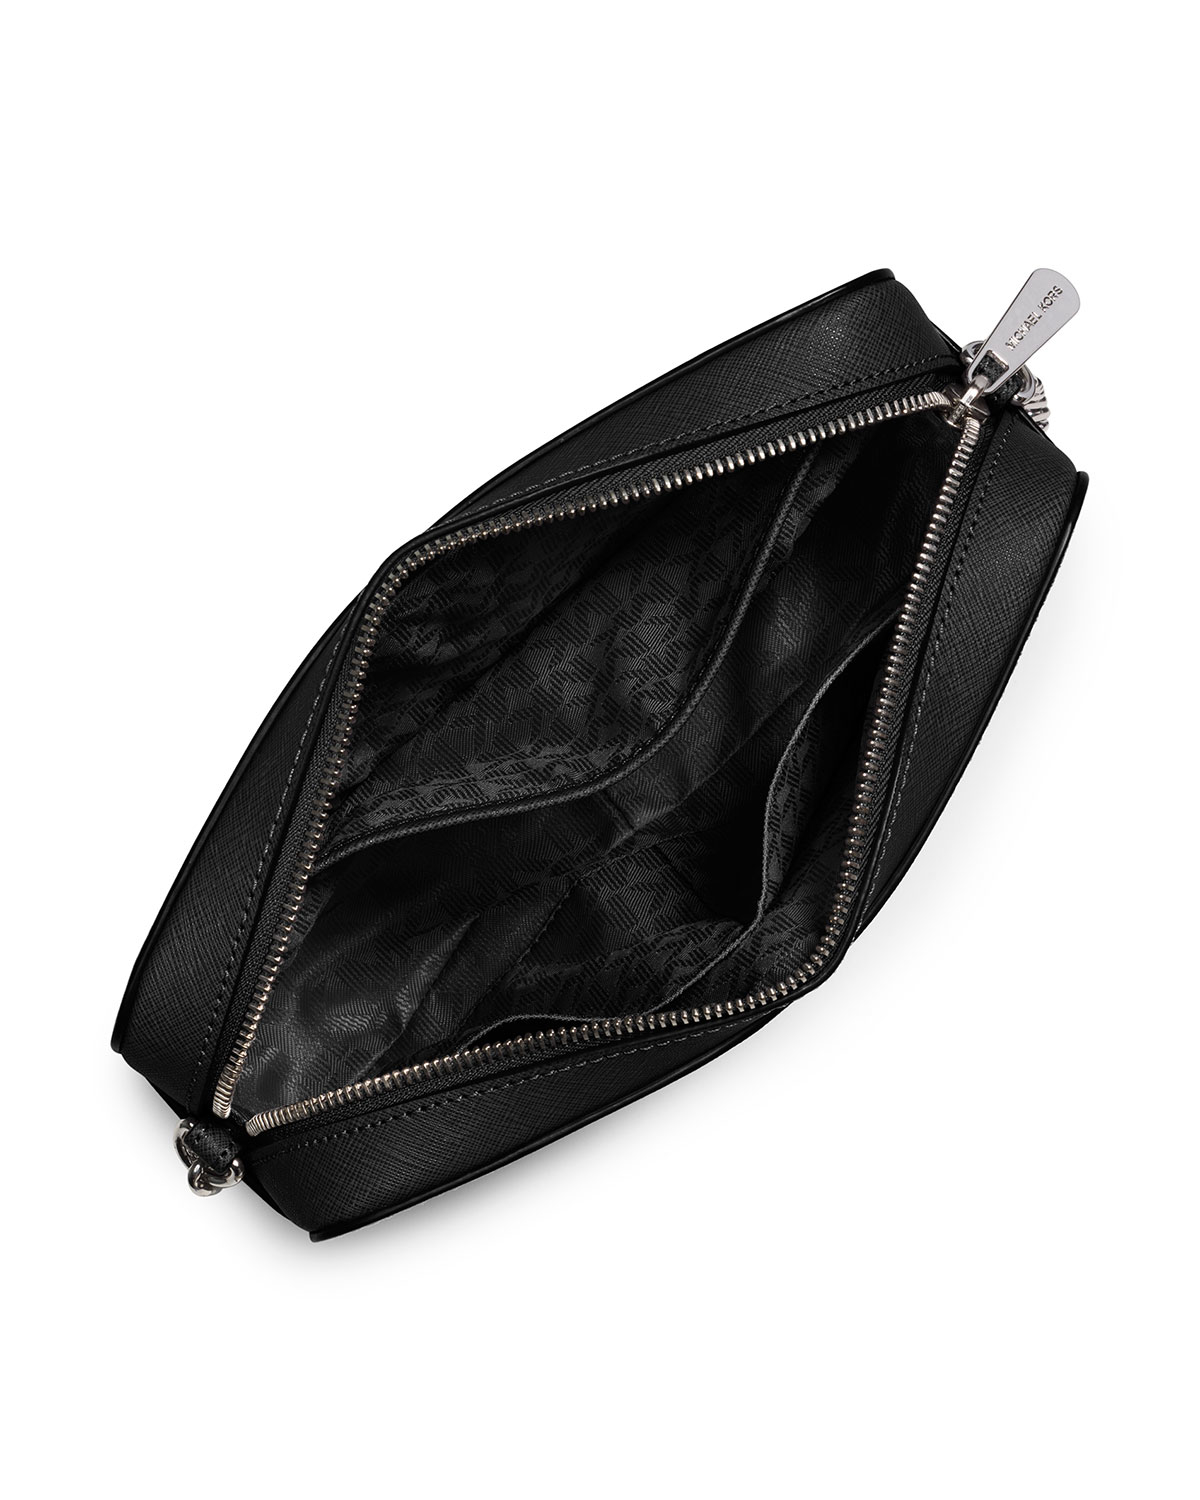 Michael michael kors Jet Set Travel Large Leather Cross-Body Bag in Black | Lyst